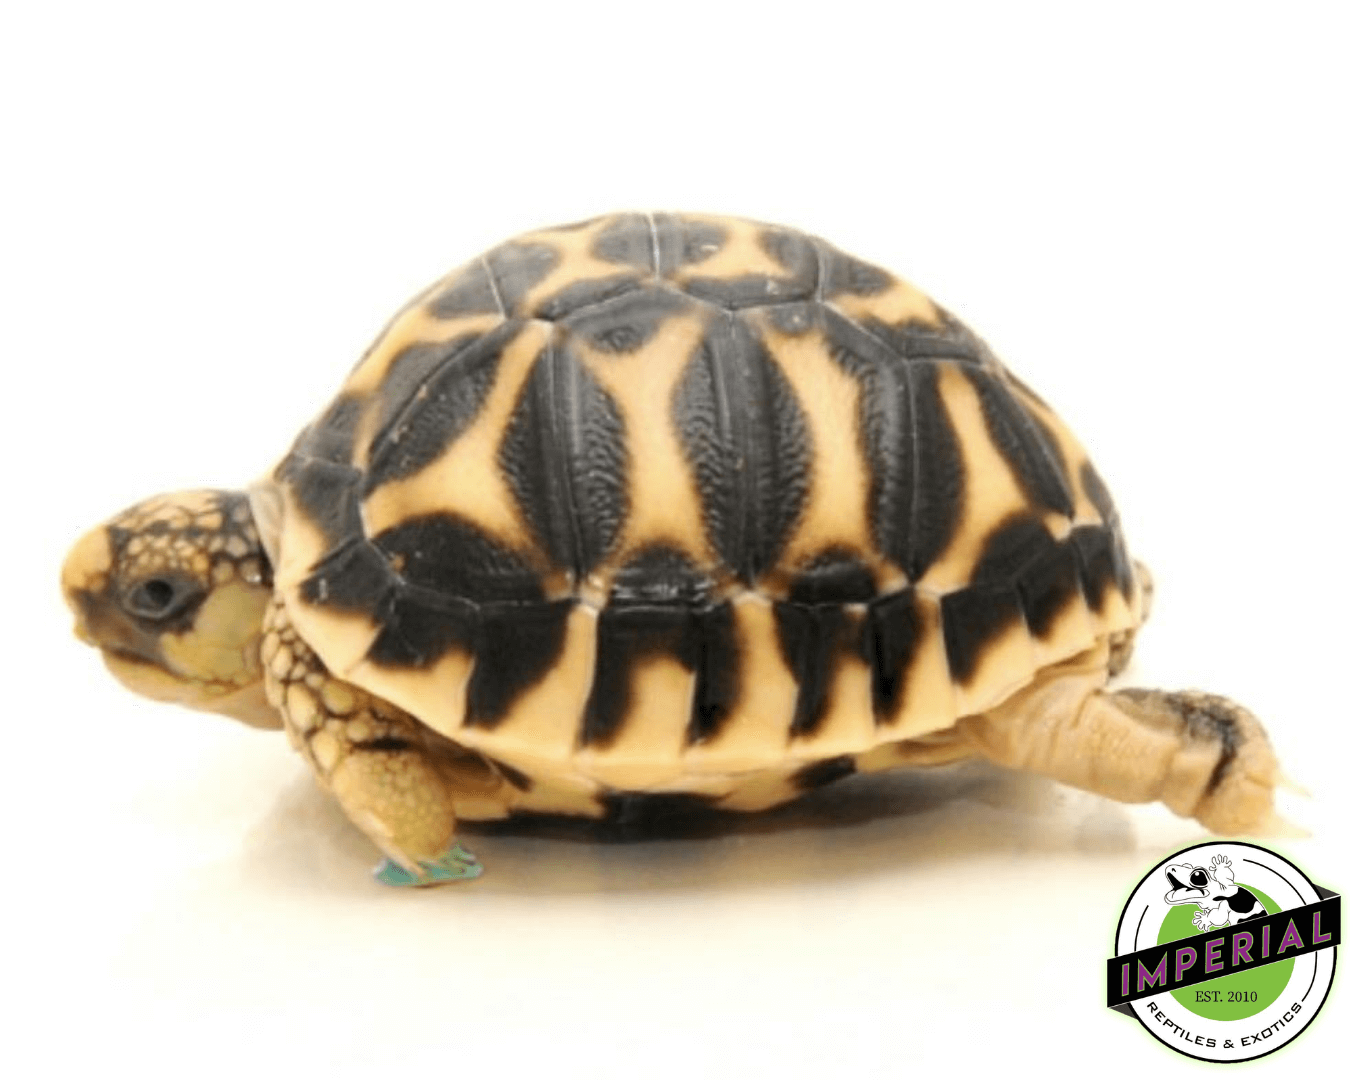 star tortoise for sale, buy reptiles online